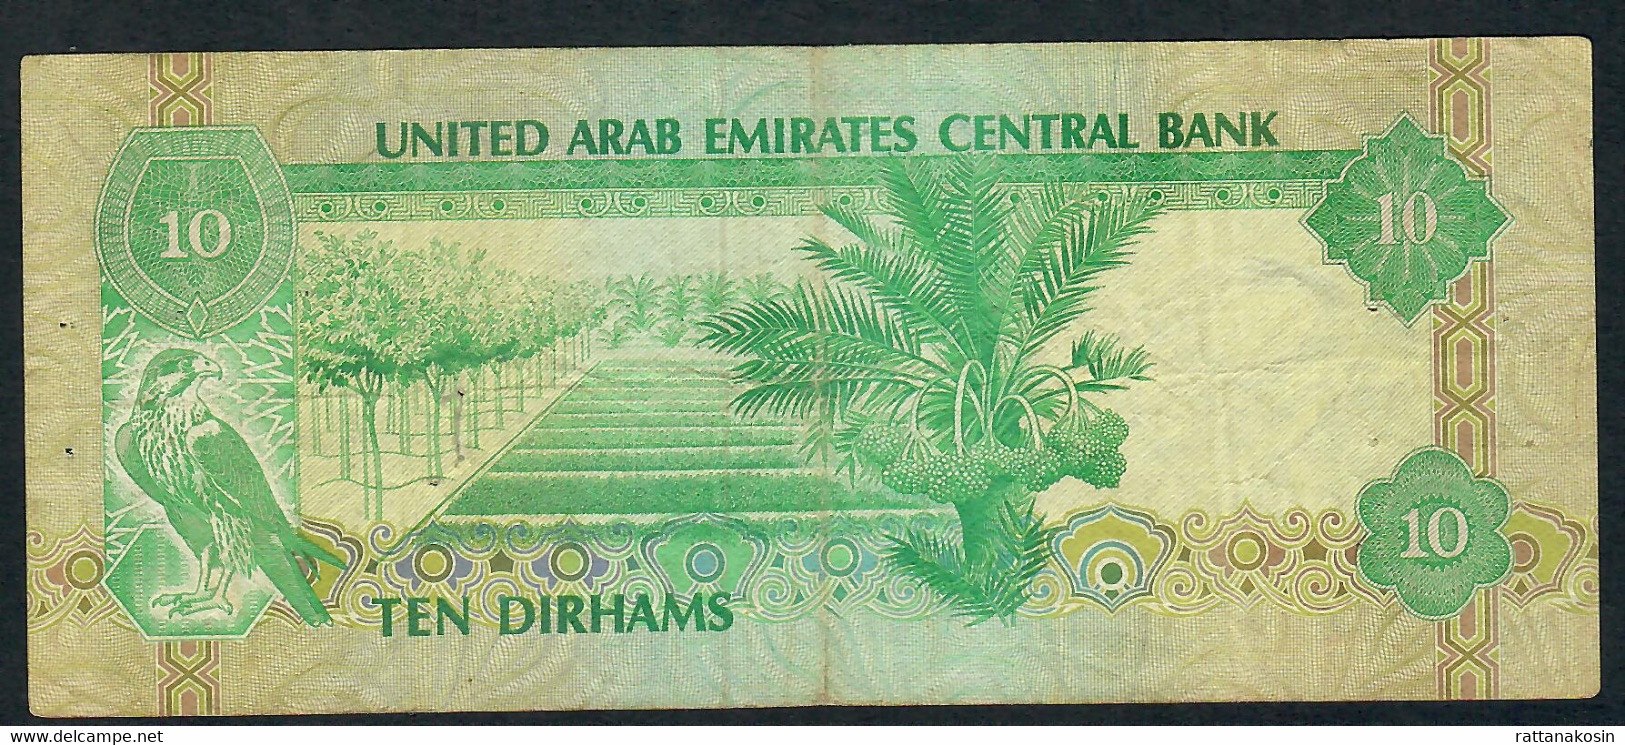 U.A.E. P8 10 DIRHAMS 1982 FINE - United Arab Emirates